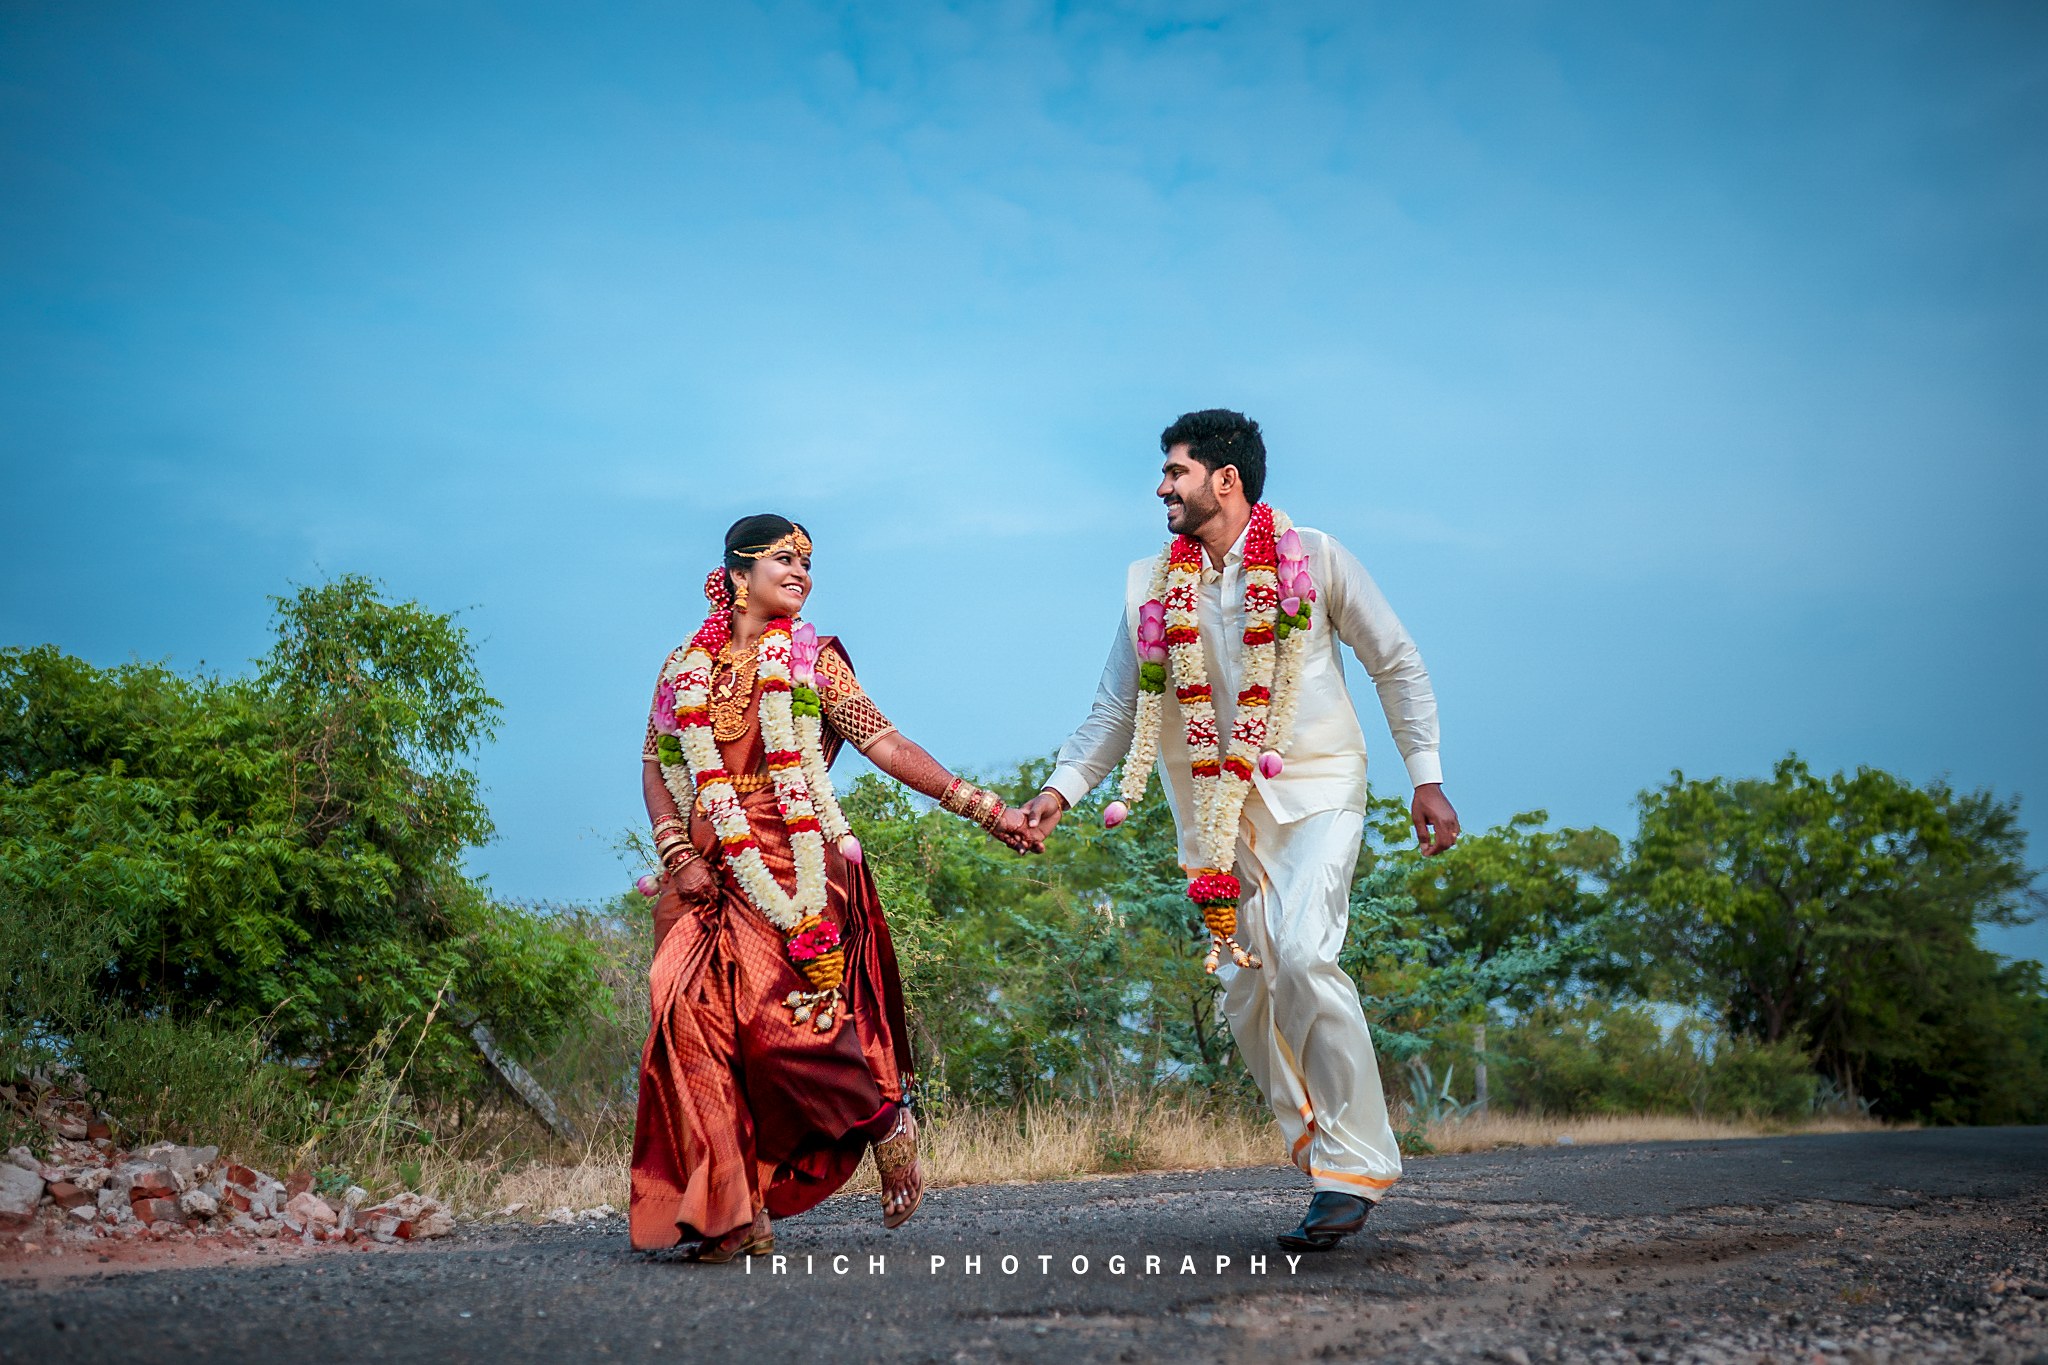 Tambrahm Wedding Photography Chennai | Focuz Studios™ | Girl poses, Indian wedding  photography poses, Indian bride poses